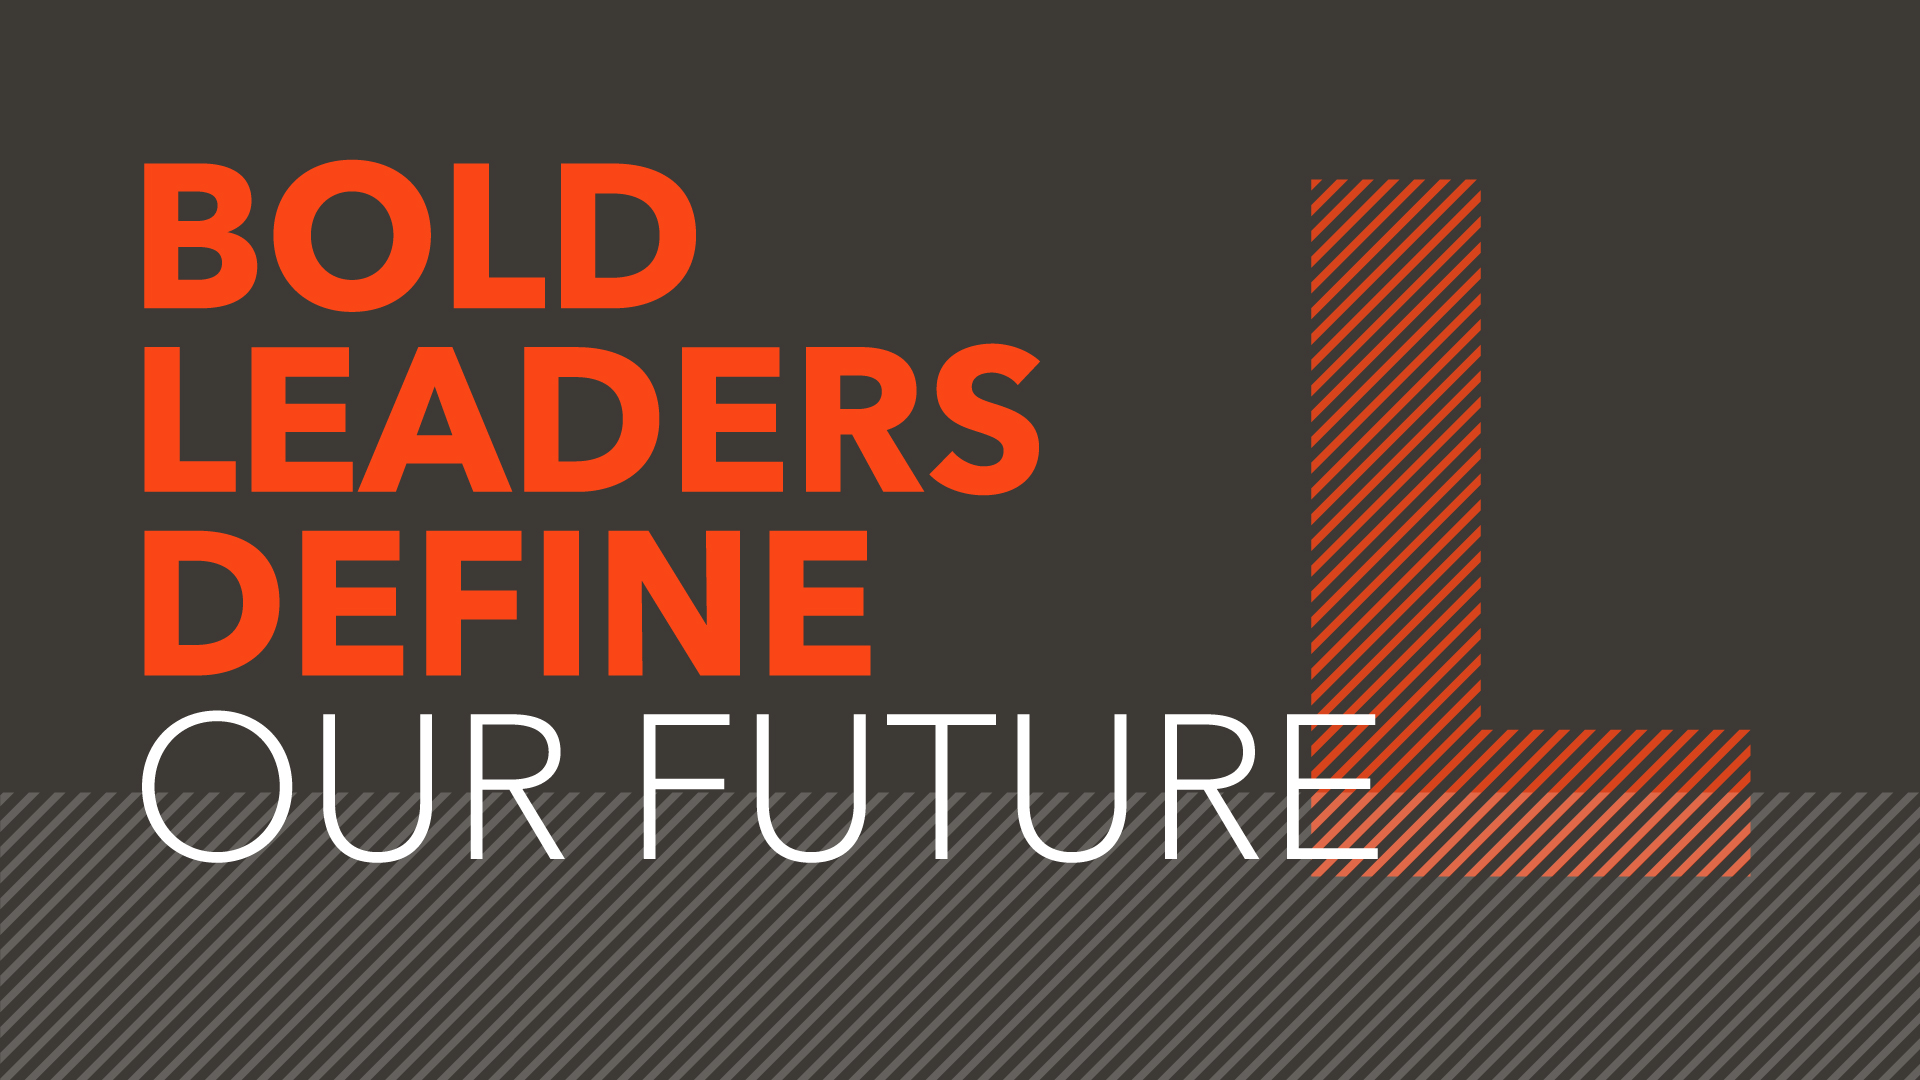 Bold leaders define our future